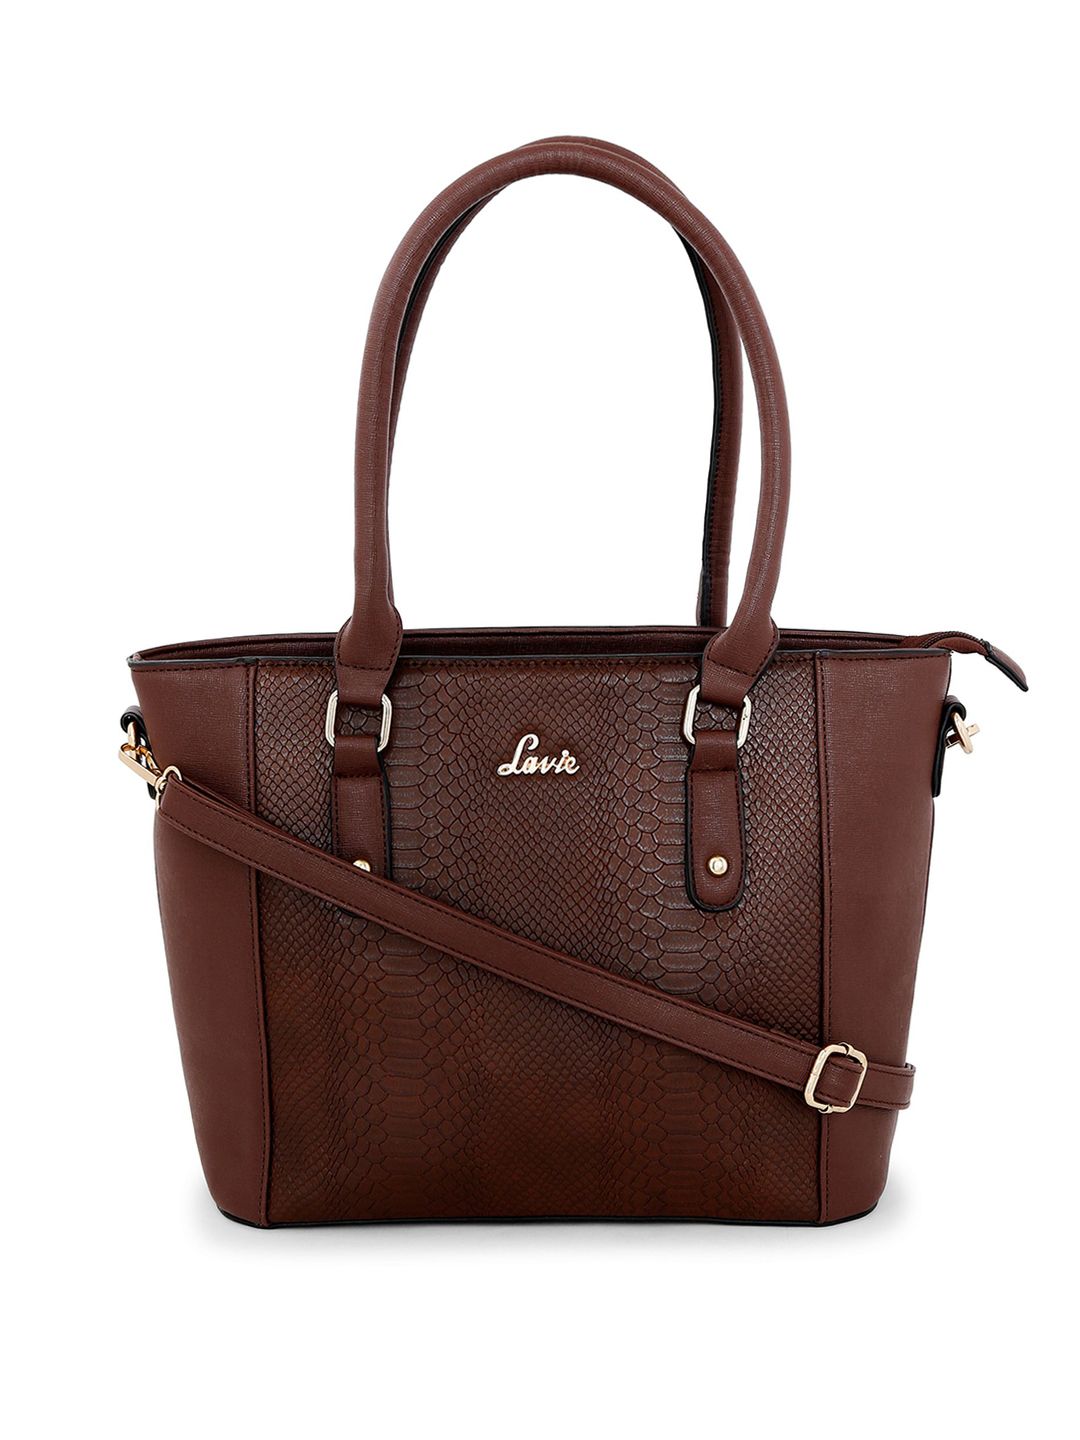 Lavie Brown Textured Shoulder Bag Price in India